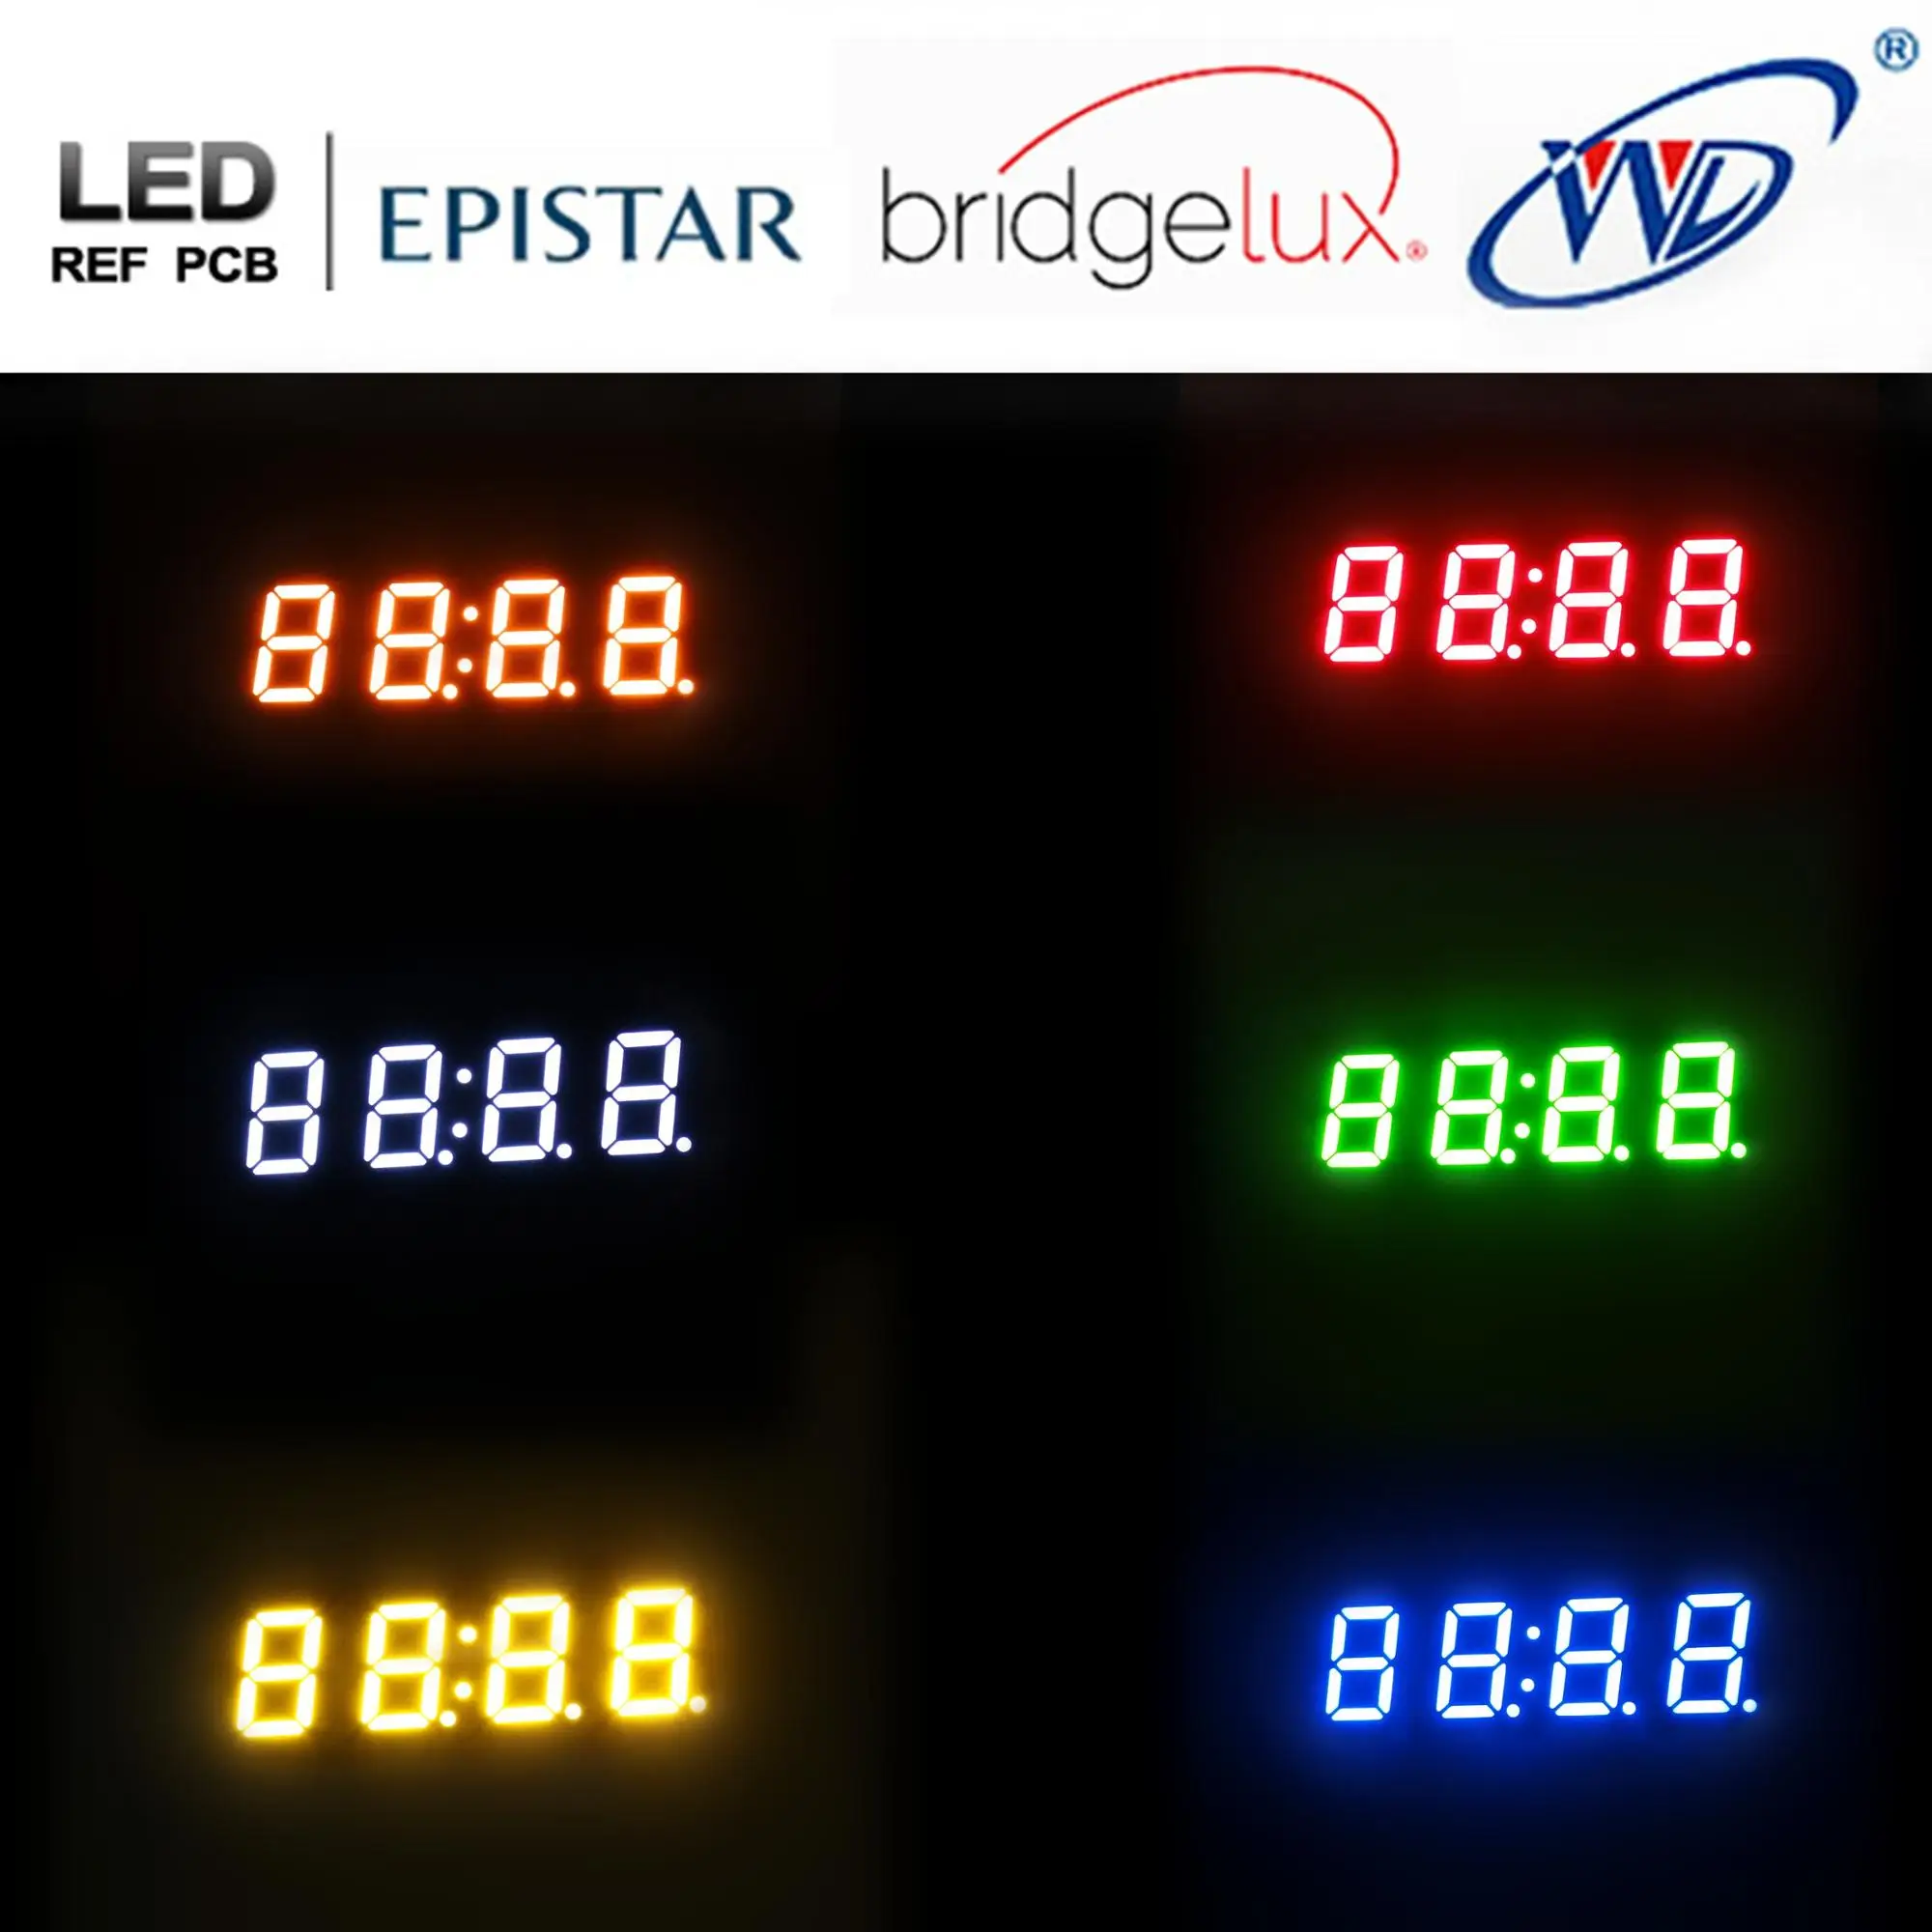 7 segment led display 4 digit mini segment display LED